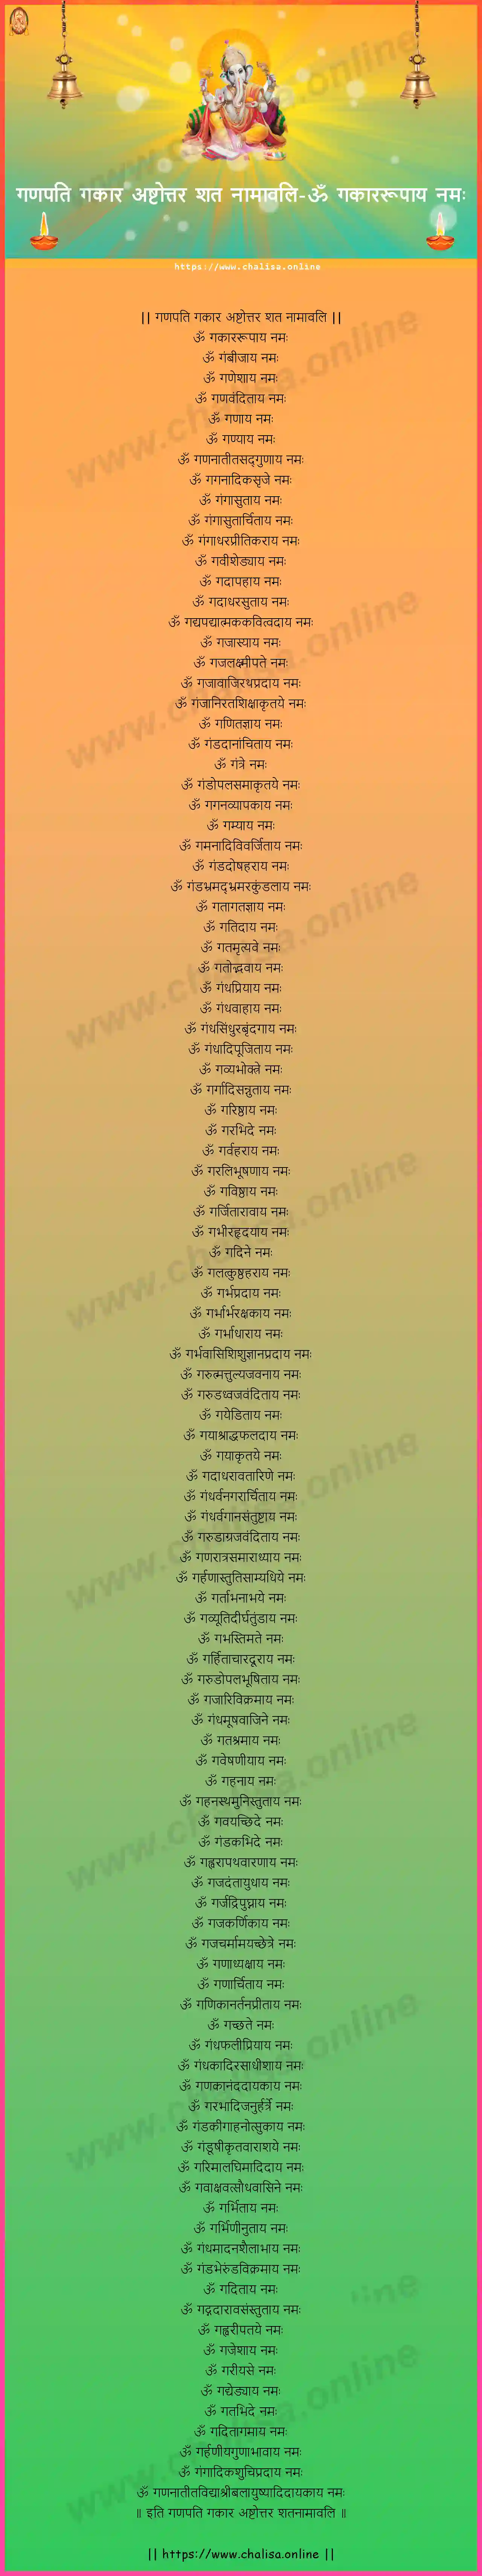 om-gakararupaya-ganapati-gakara-ashtottara-sata-namavali-nepali-nepali-lyrics-download